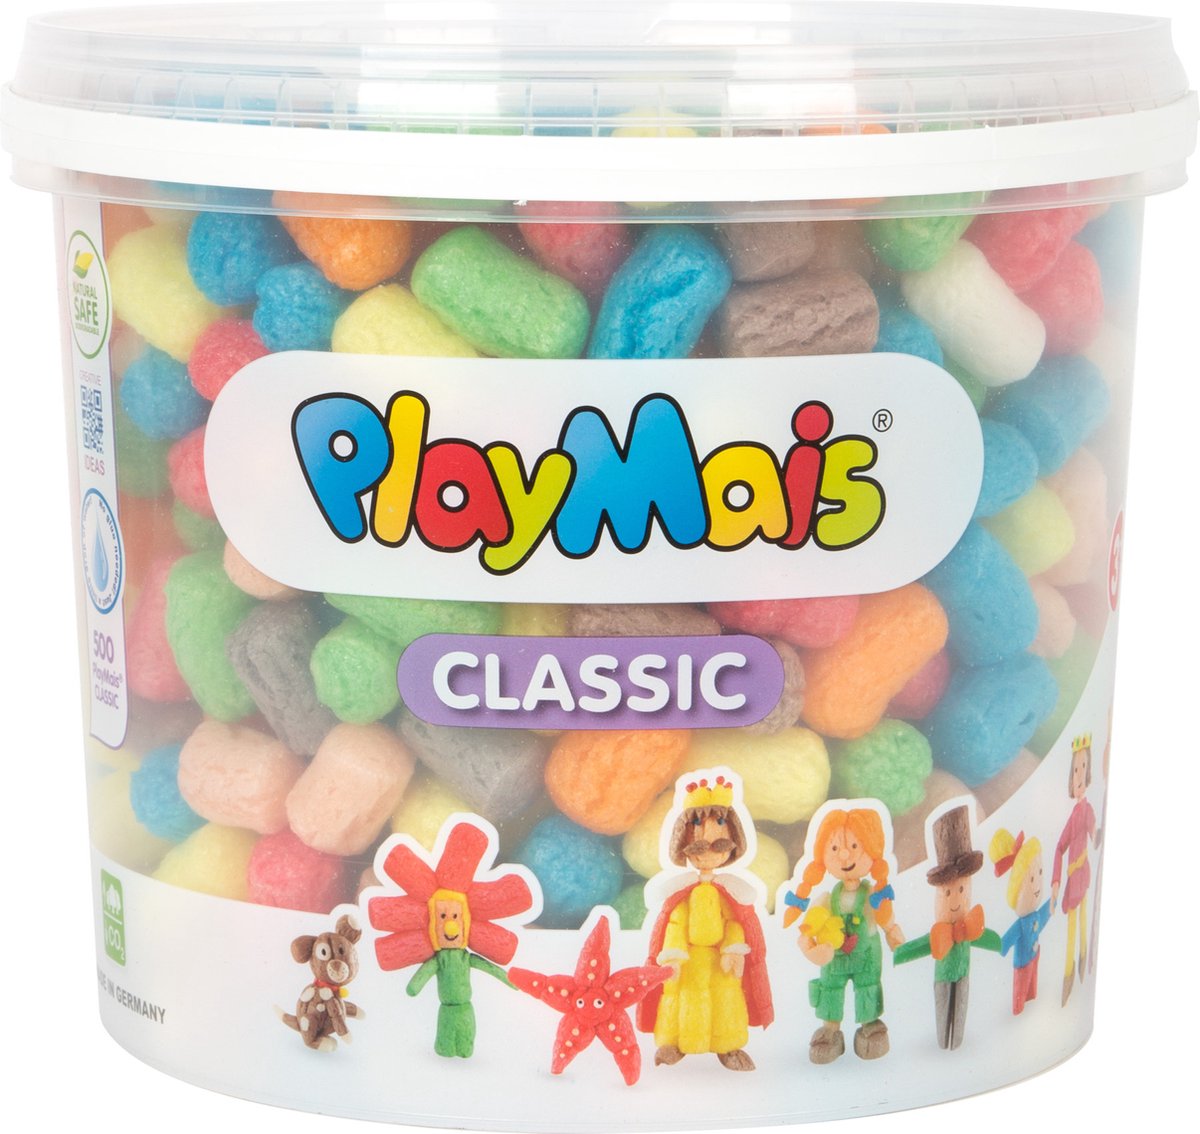 PlayMais Basic Emmer 5 Liter (> 500 Stukjes) - PlayMais